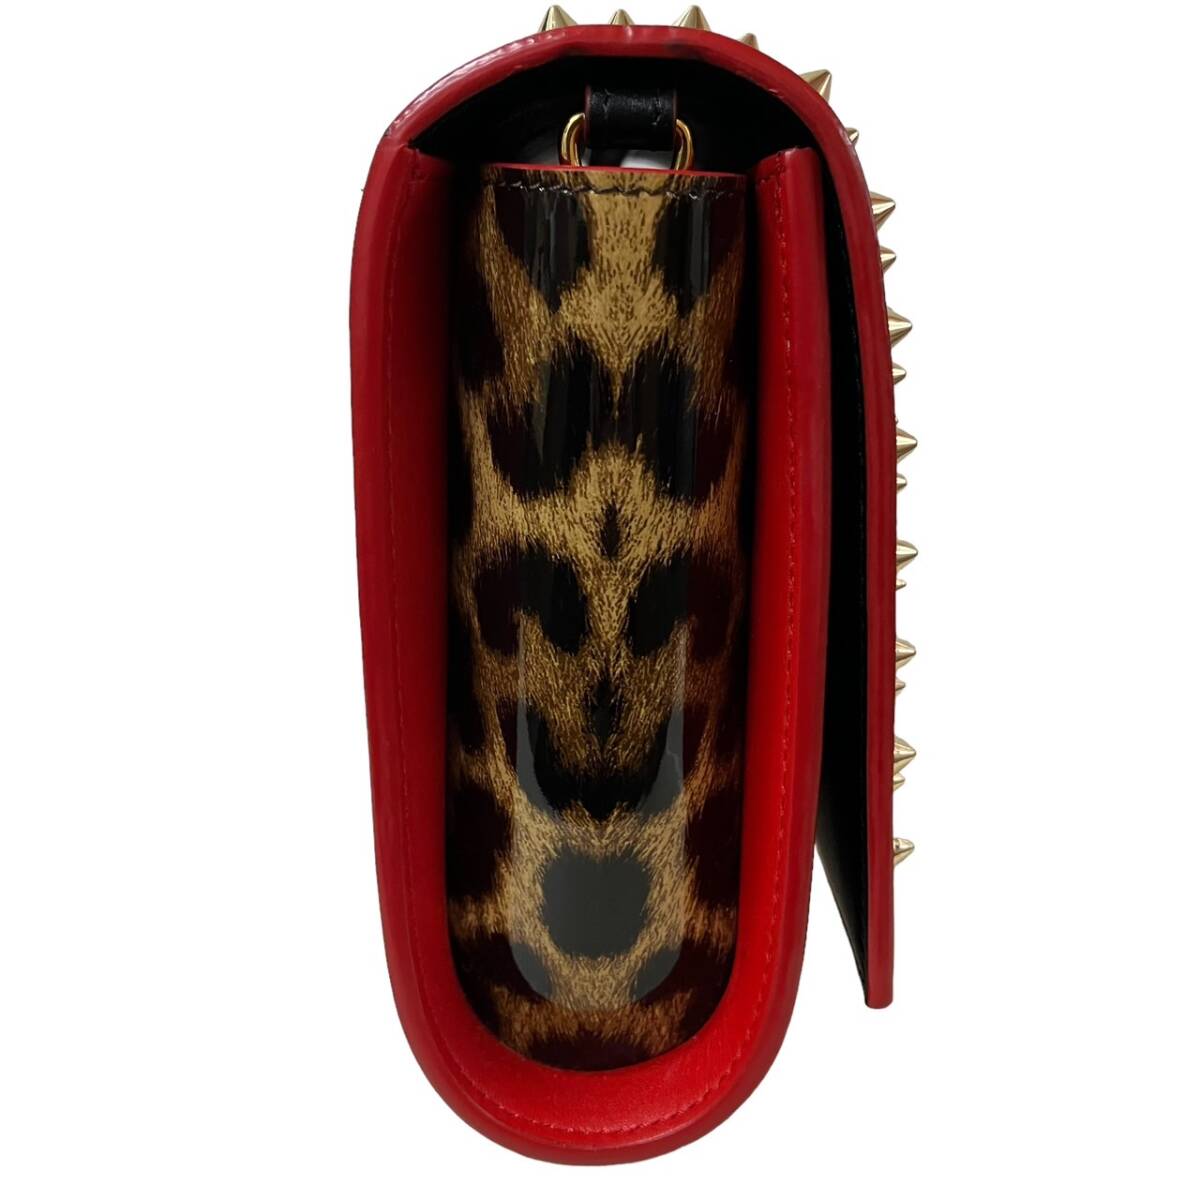 1 jpy Louboutin paroma clutch spike studs chain wallet leather black Leopard pattern shoulder bag 